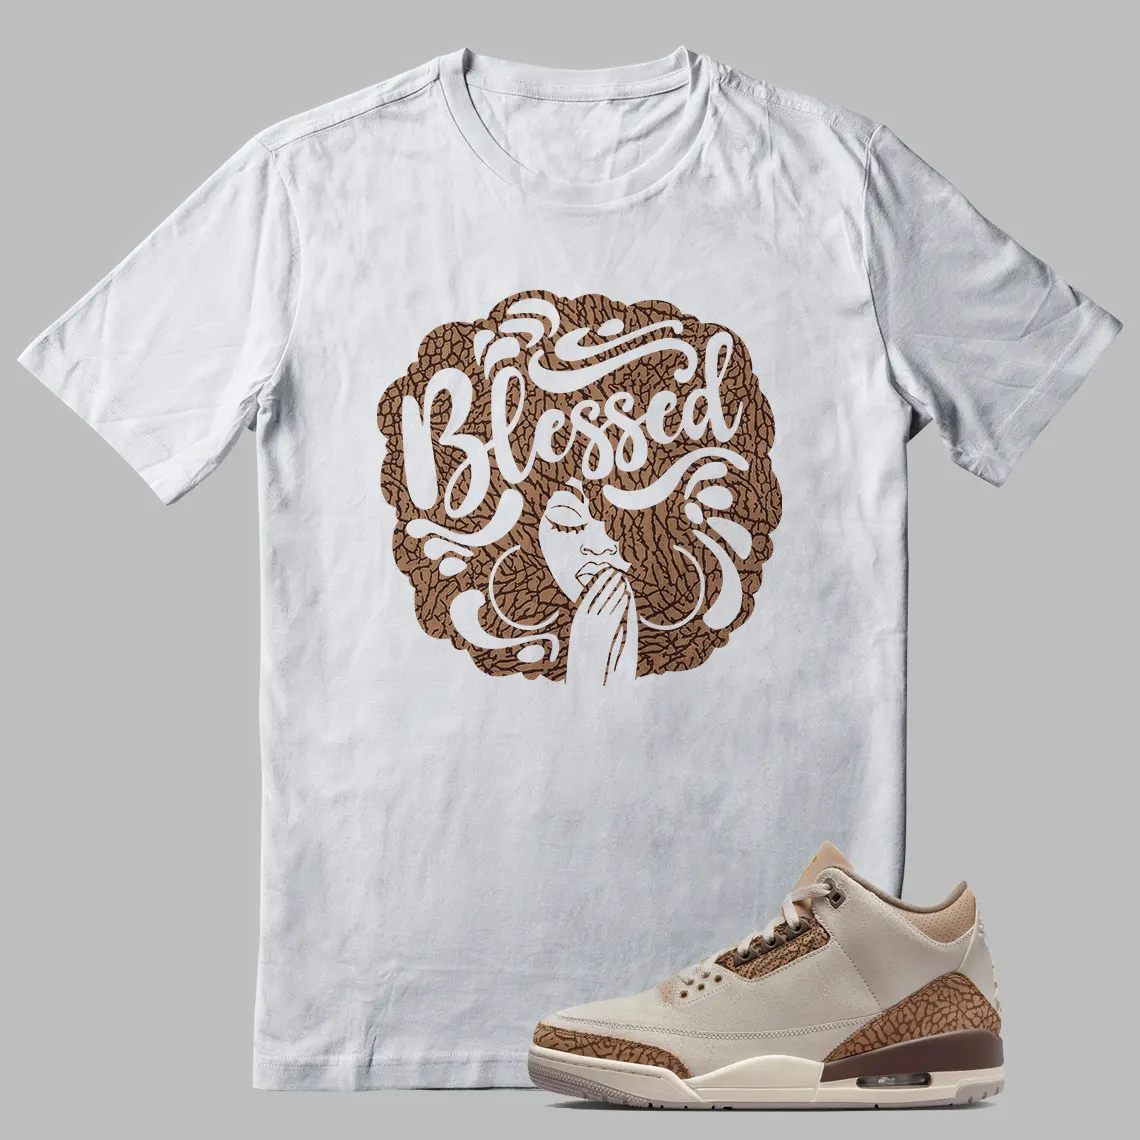 Jordan 3 Palomino T-shirt Blessed Girl Graphic